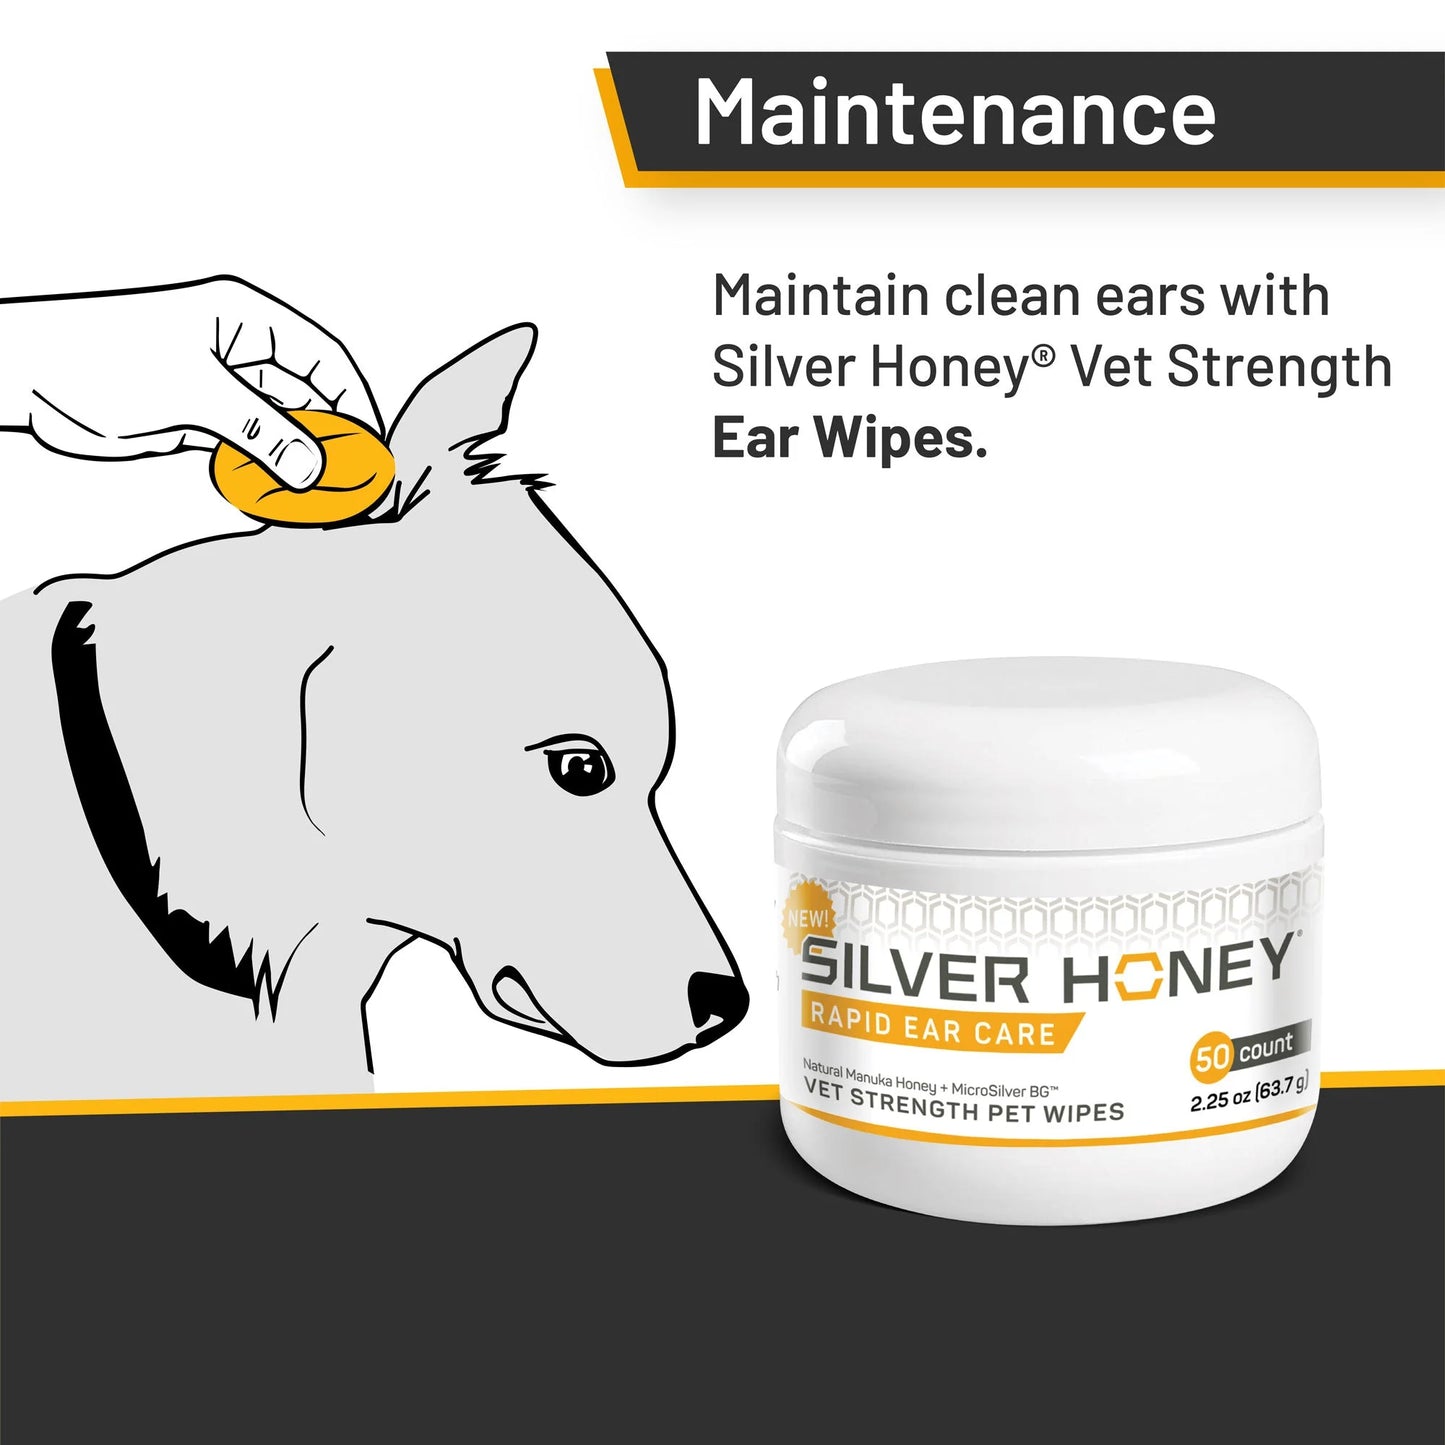 Silver Honey Rapid Ear Care Vet Strength Wipes